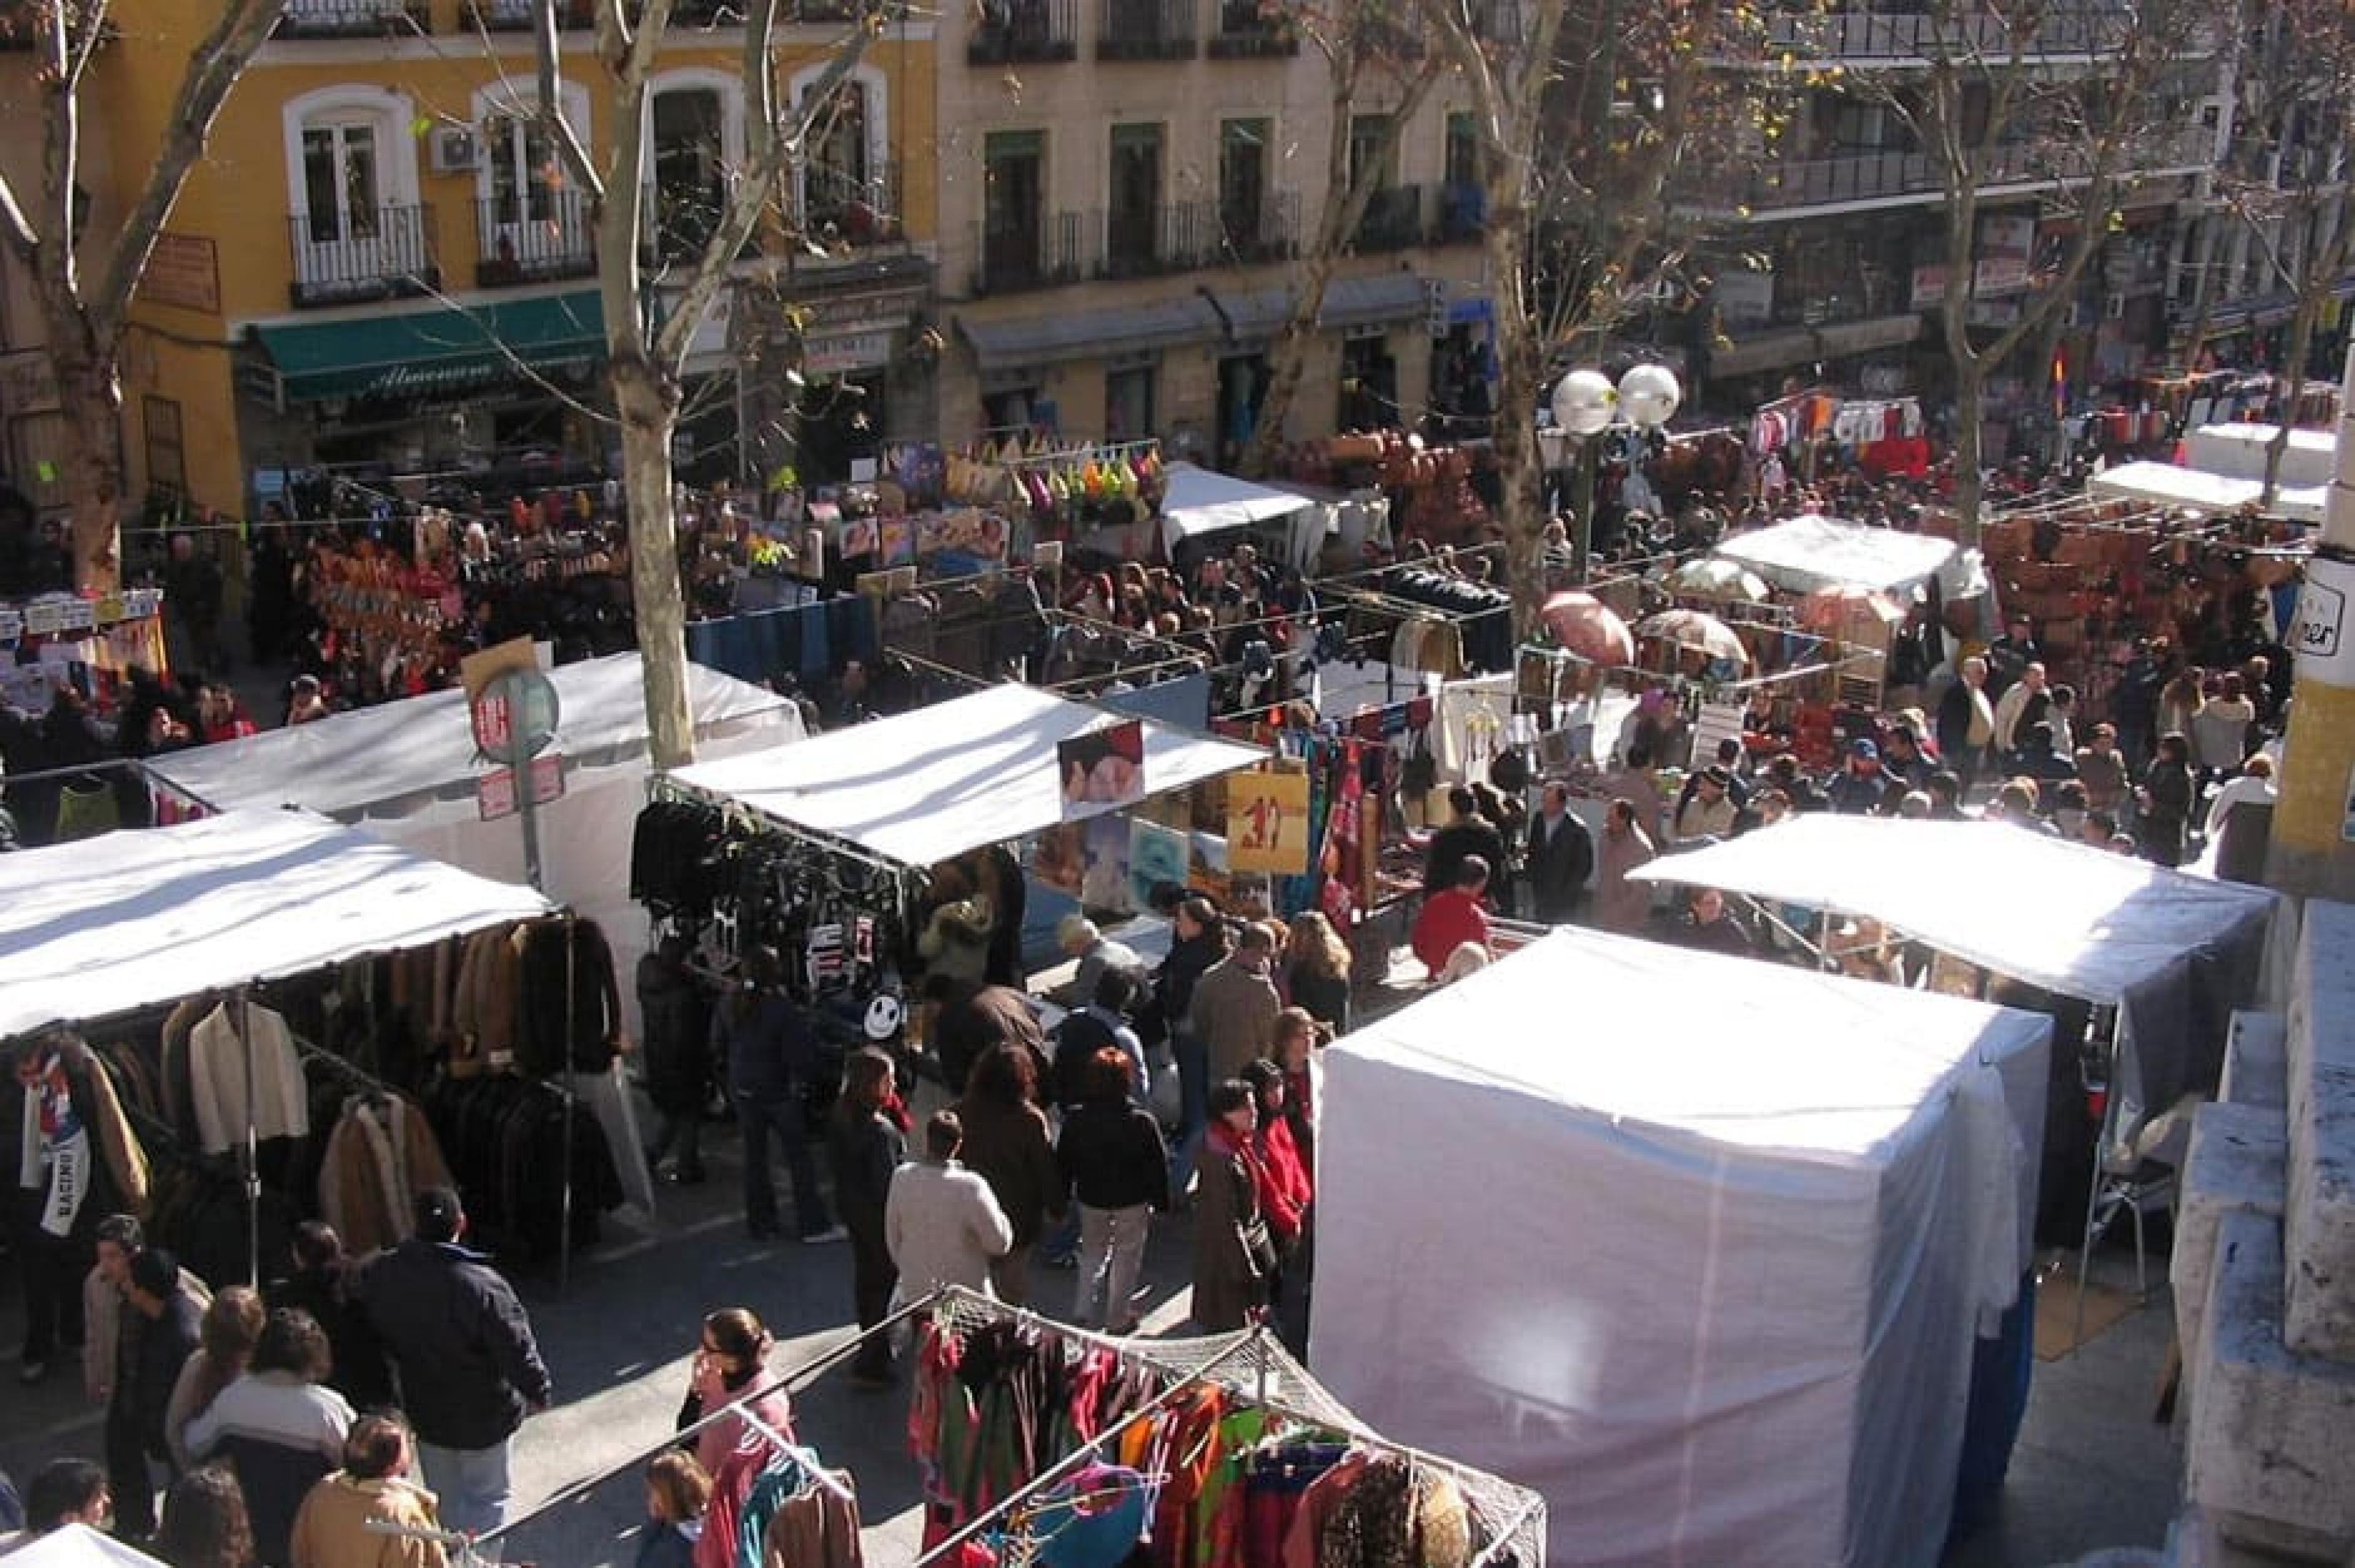 Shoes at El Rastro Market, Madrid, Spain - courtesy El Rastro Wikimedia